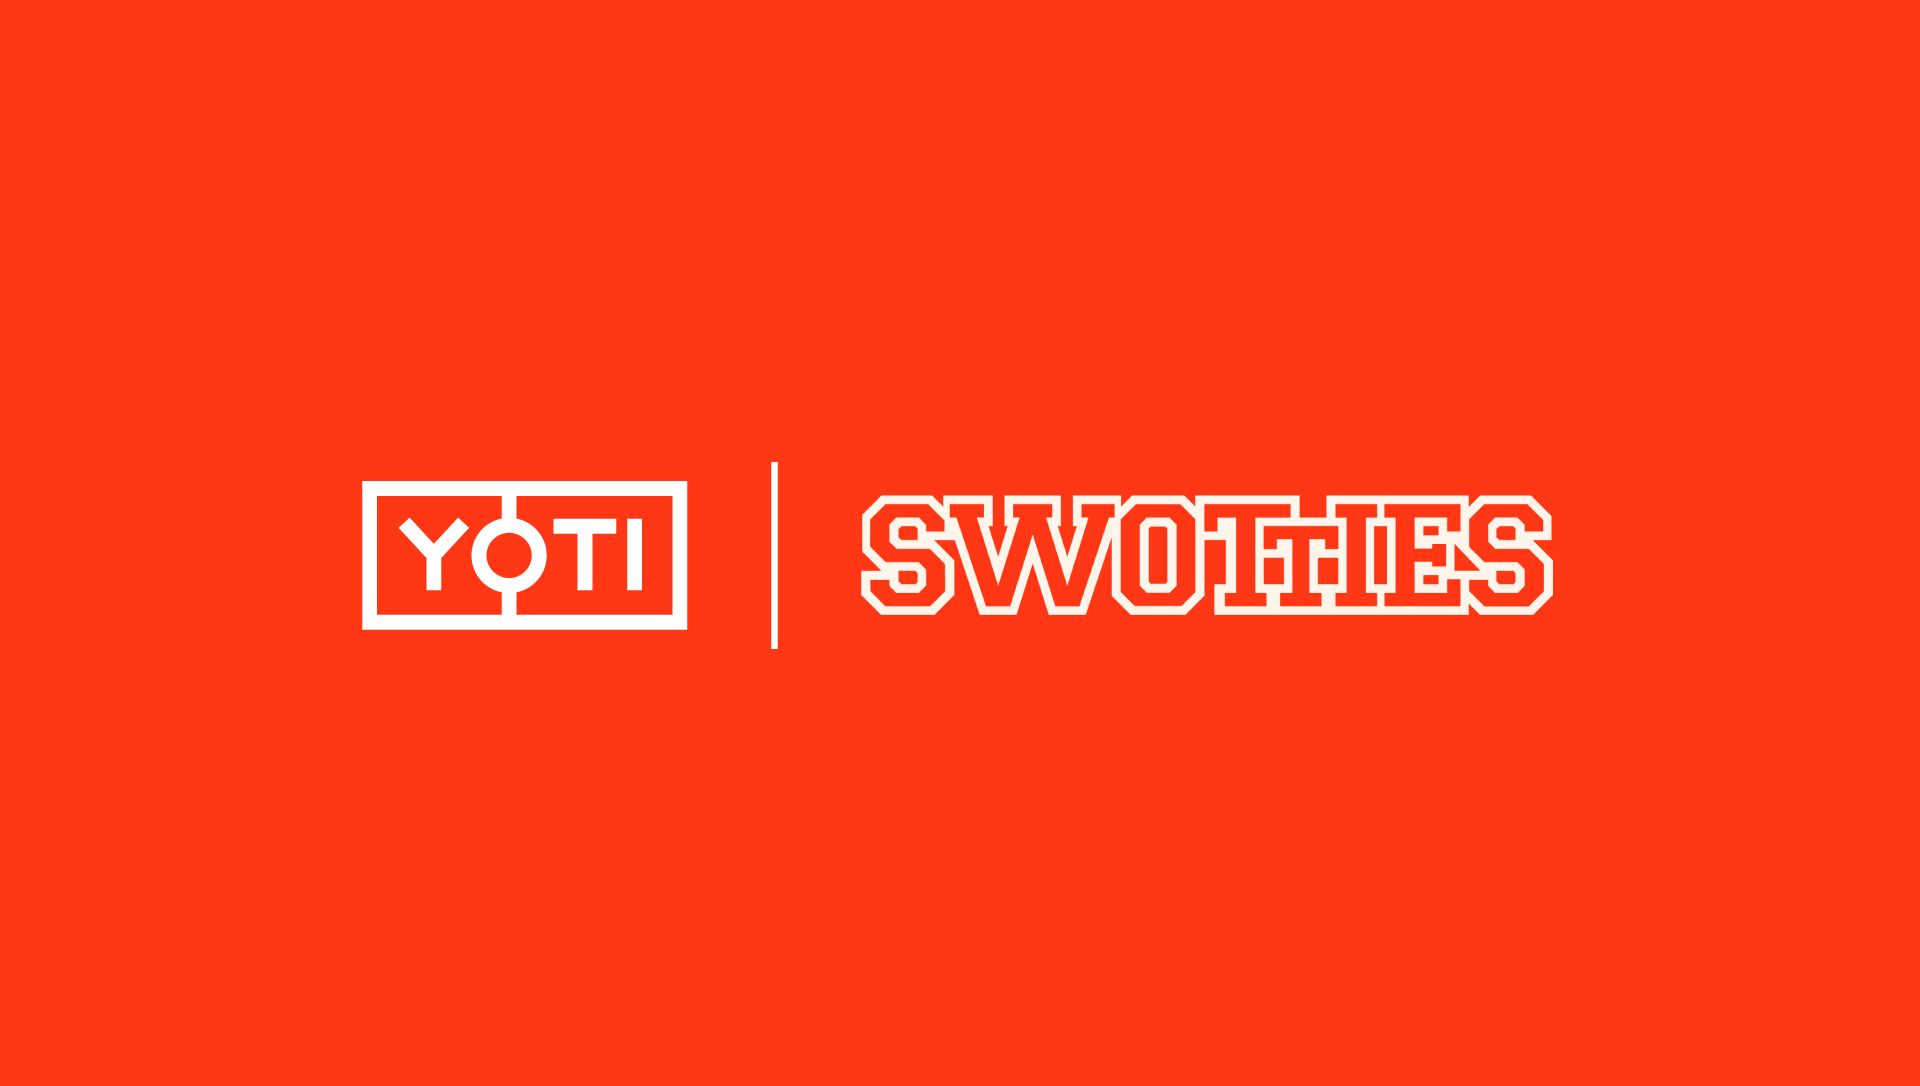 Yoti partners with Swotties